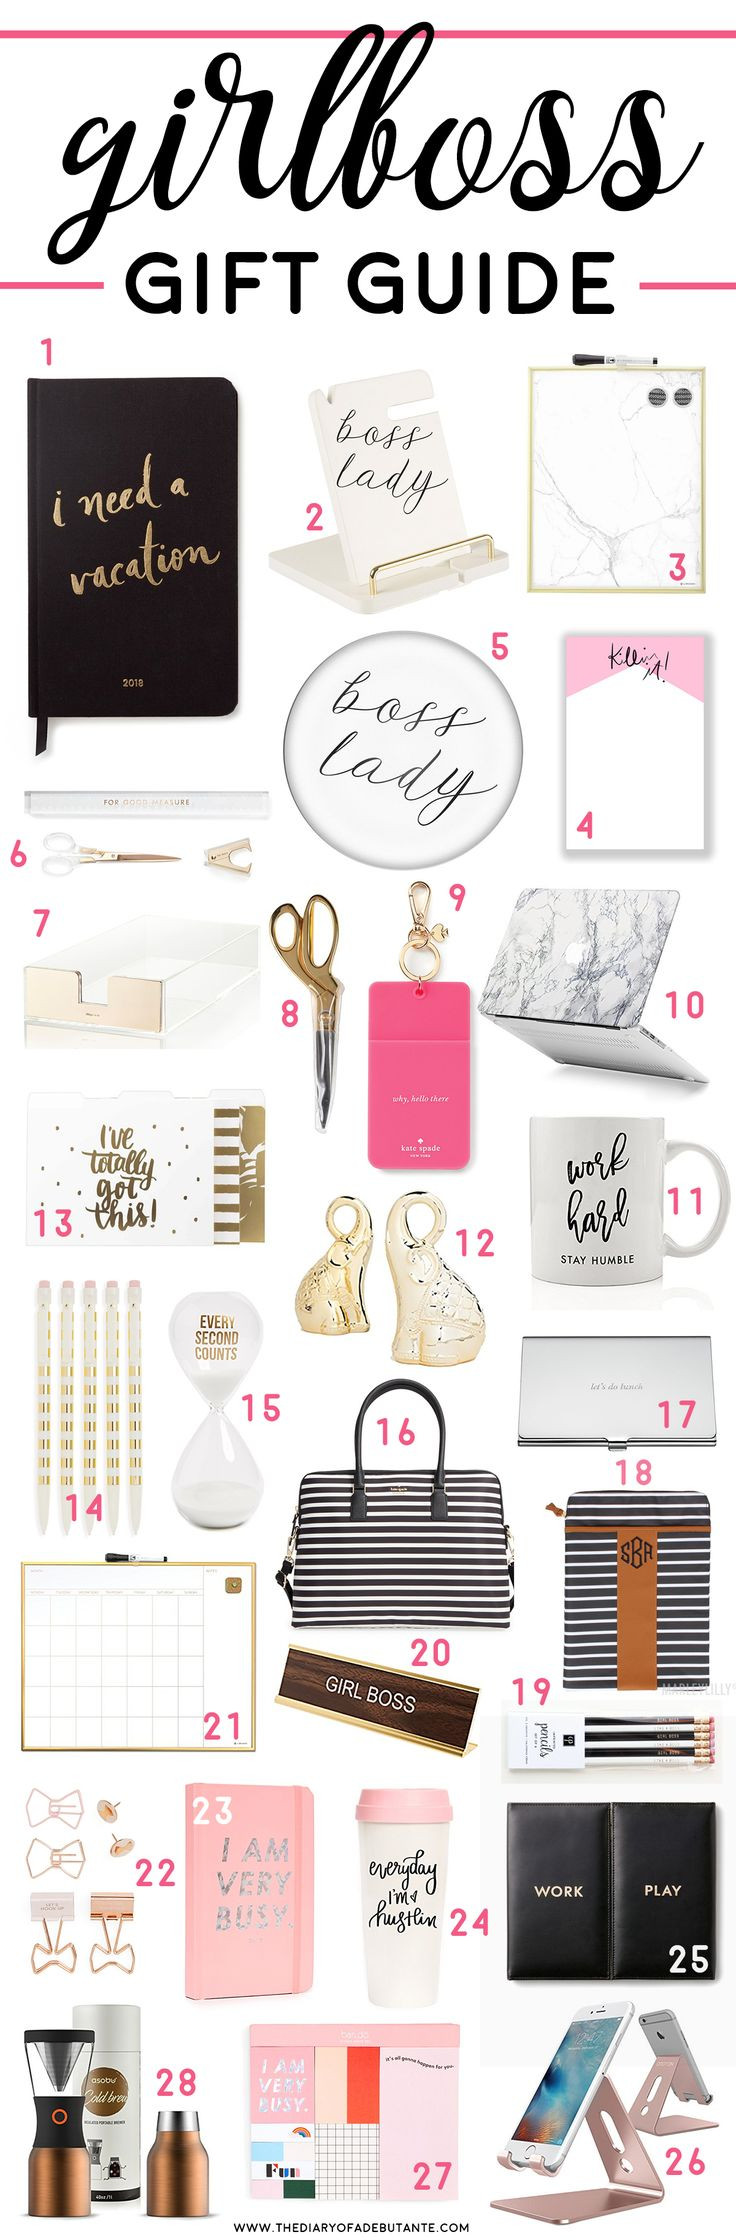 Christmas Gift Ideas For Boss
 Best 25 Boss ts ideas on Pinterest